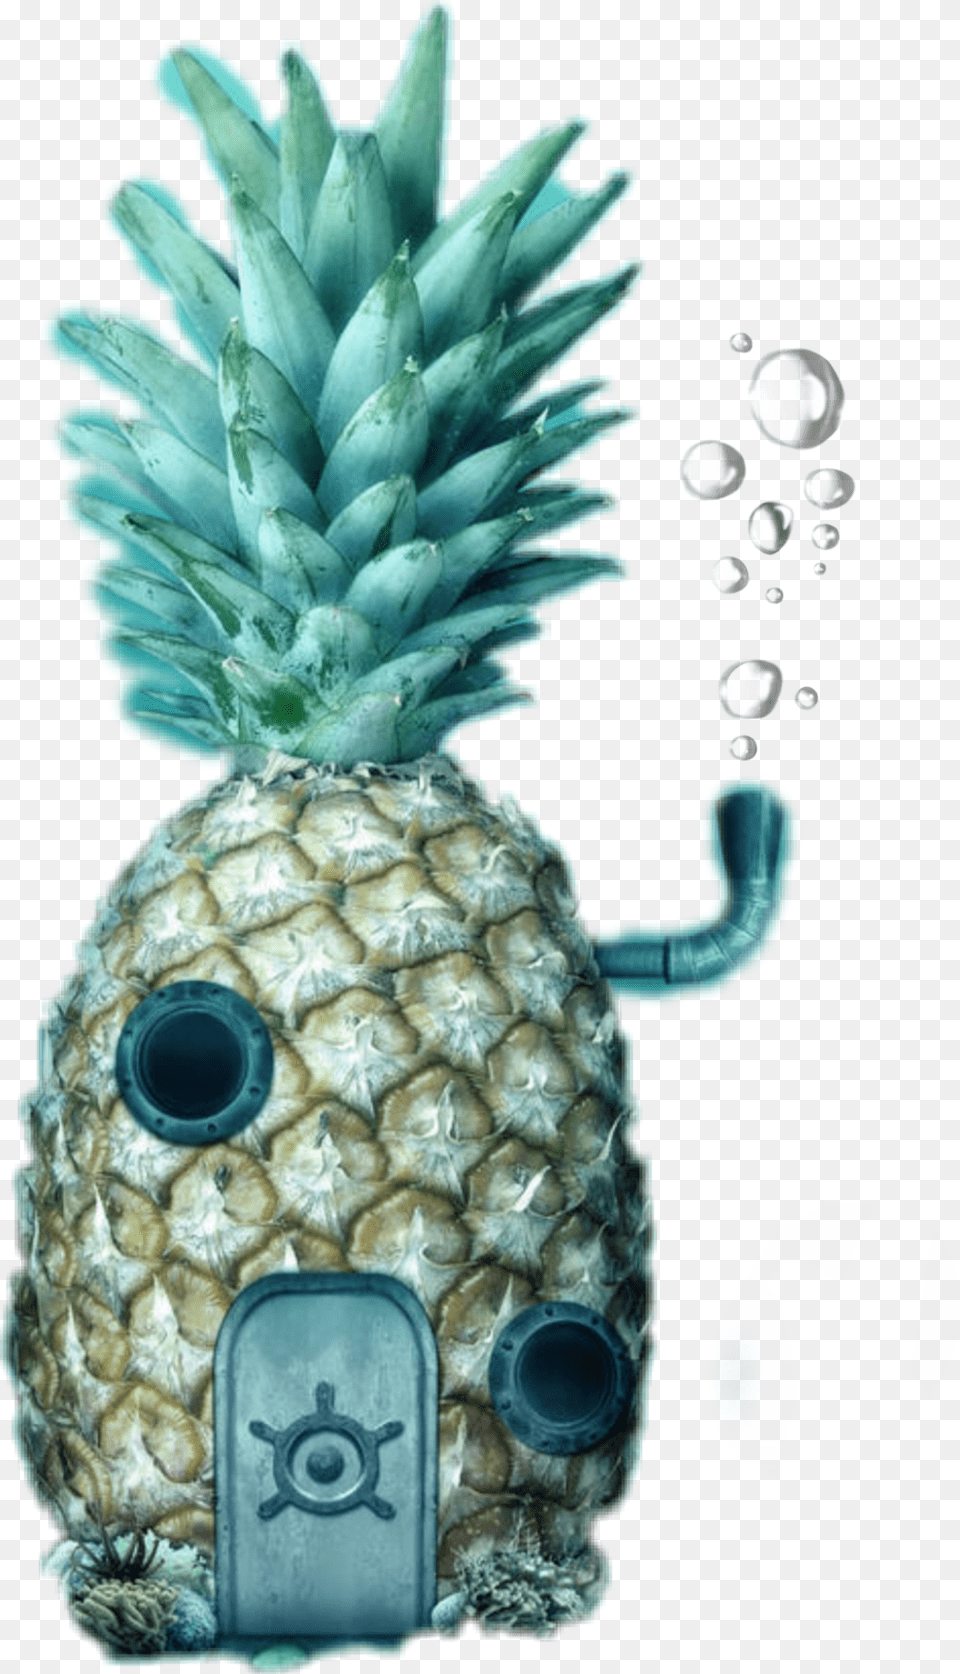 Spongebob House Pineapple Pineapple Realistic Pineapple Spongebob, Food, Fruit, Plant, Produce Free Png Download